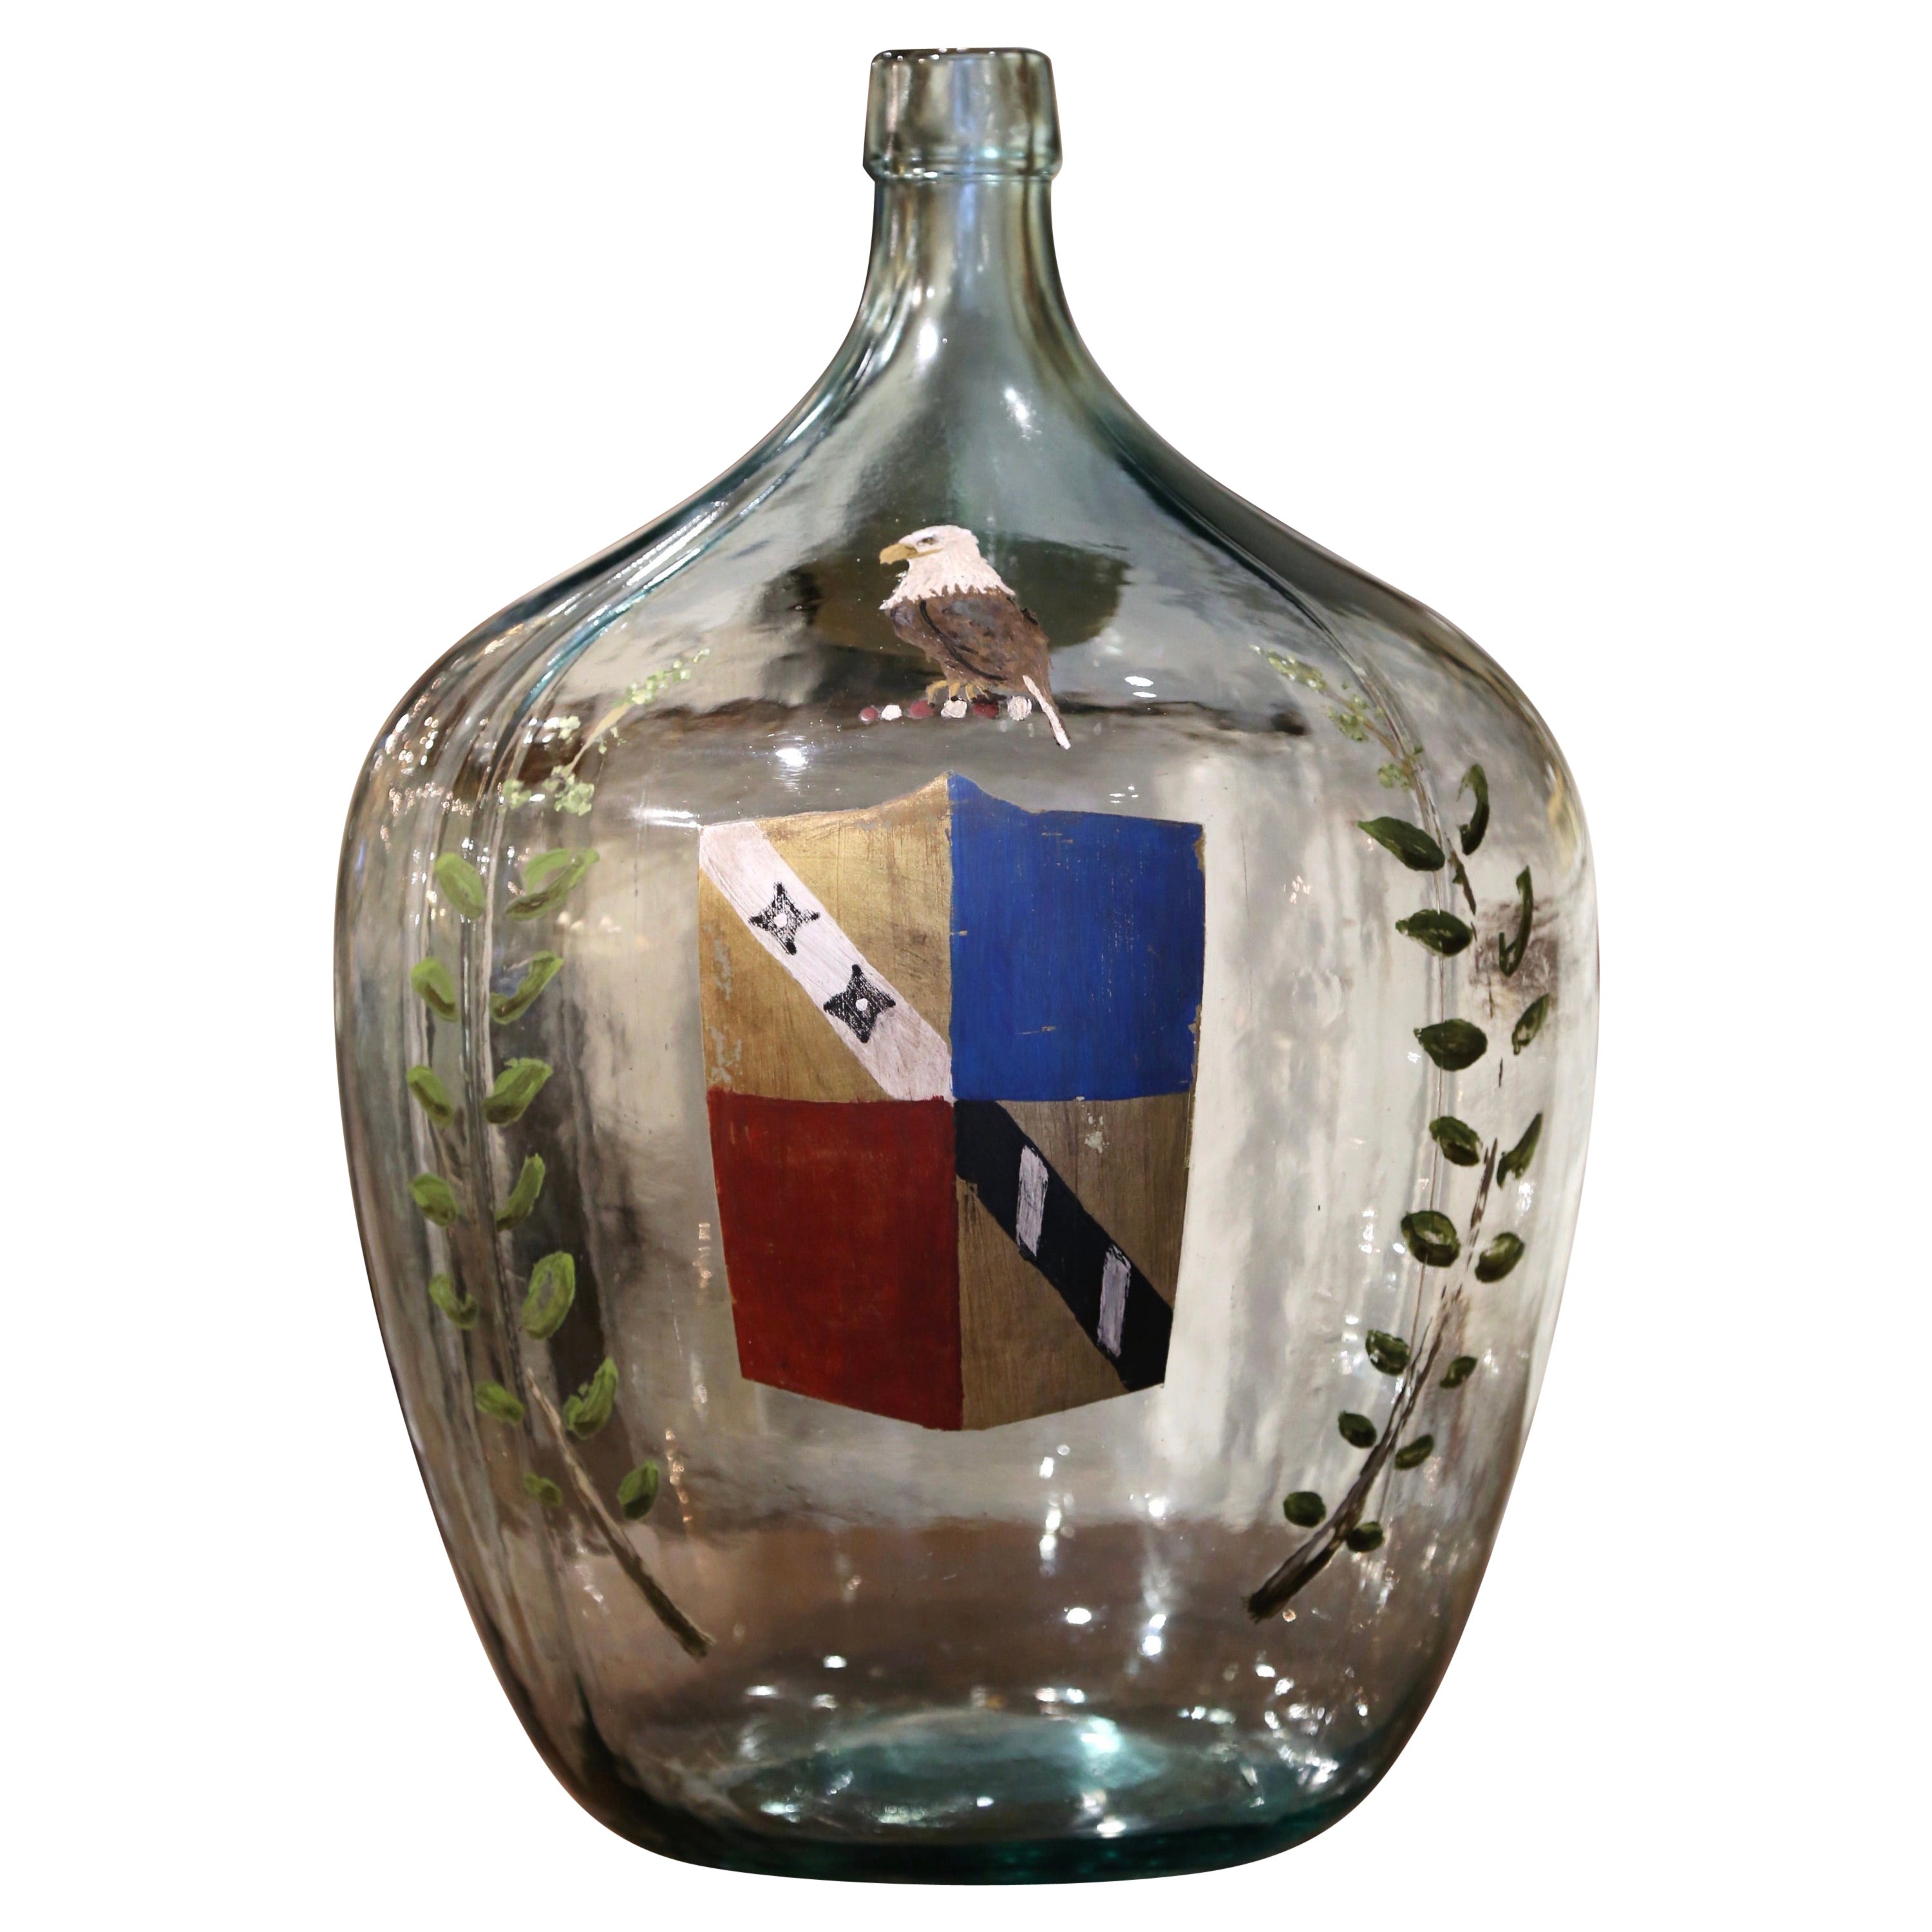 Handgeblasene Demijohn-Glasflasche mit bemaltem Wappen